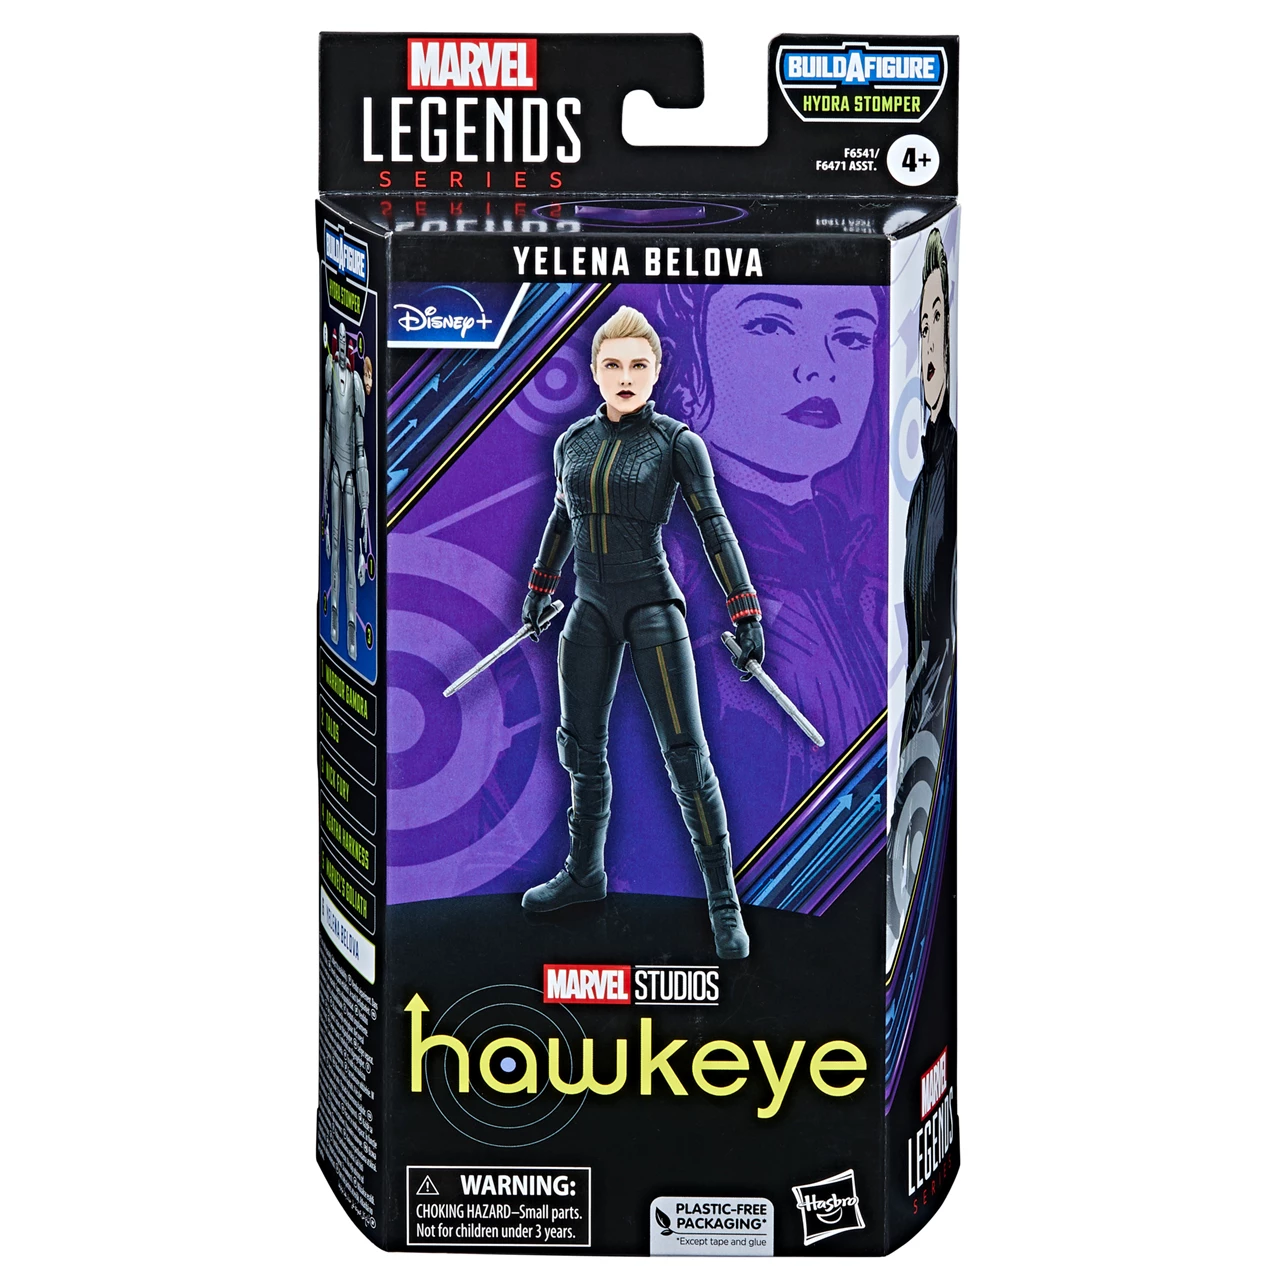 Yelena Belova Hawkeye Hasbro Marvel Legends Series Action Figure